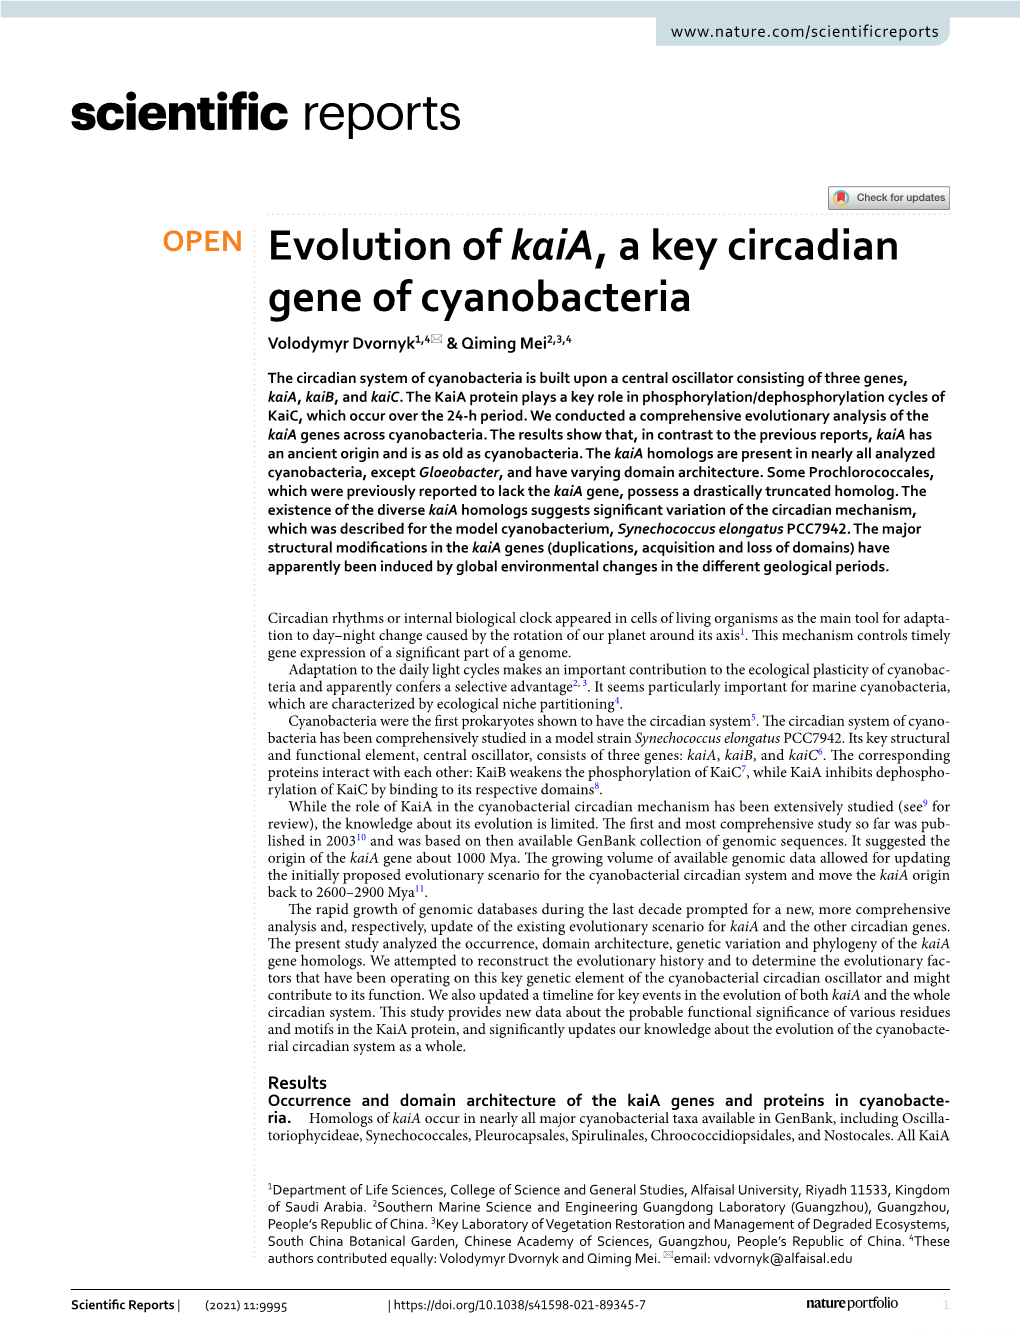 Evolution of Kaia, a Key Circadian Gene of Cyanobacteria Volodymyr Dvornyk1,4* & Qiming Mei2,3,4